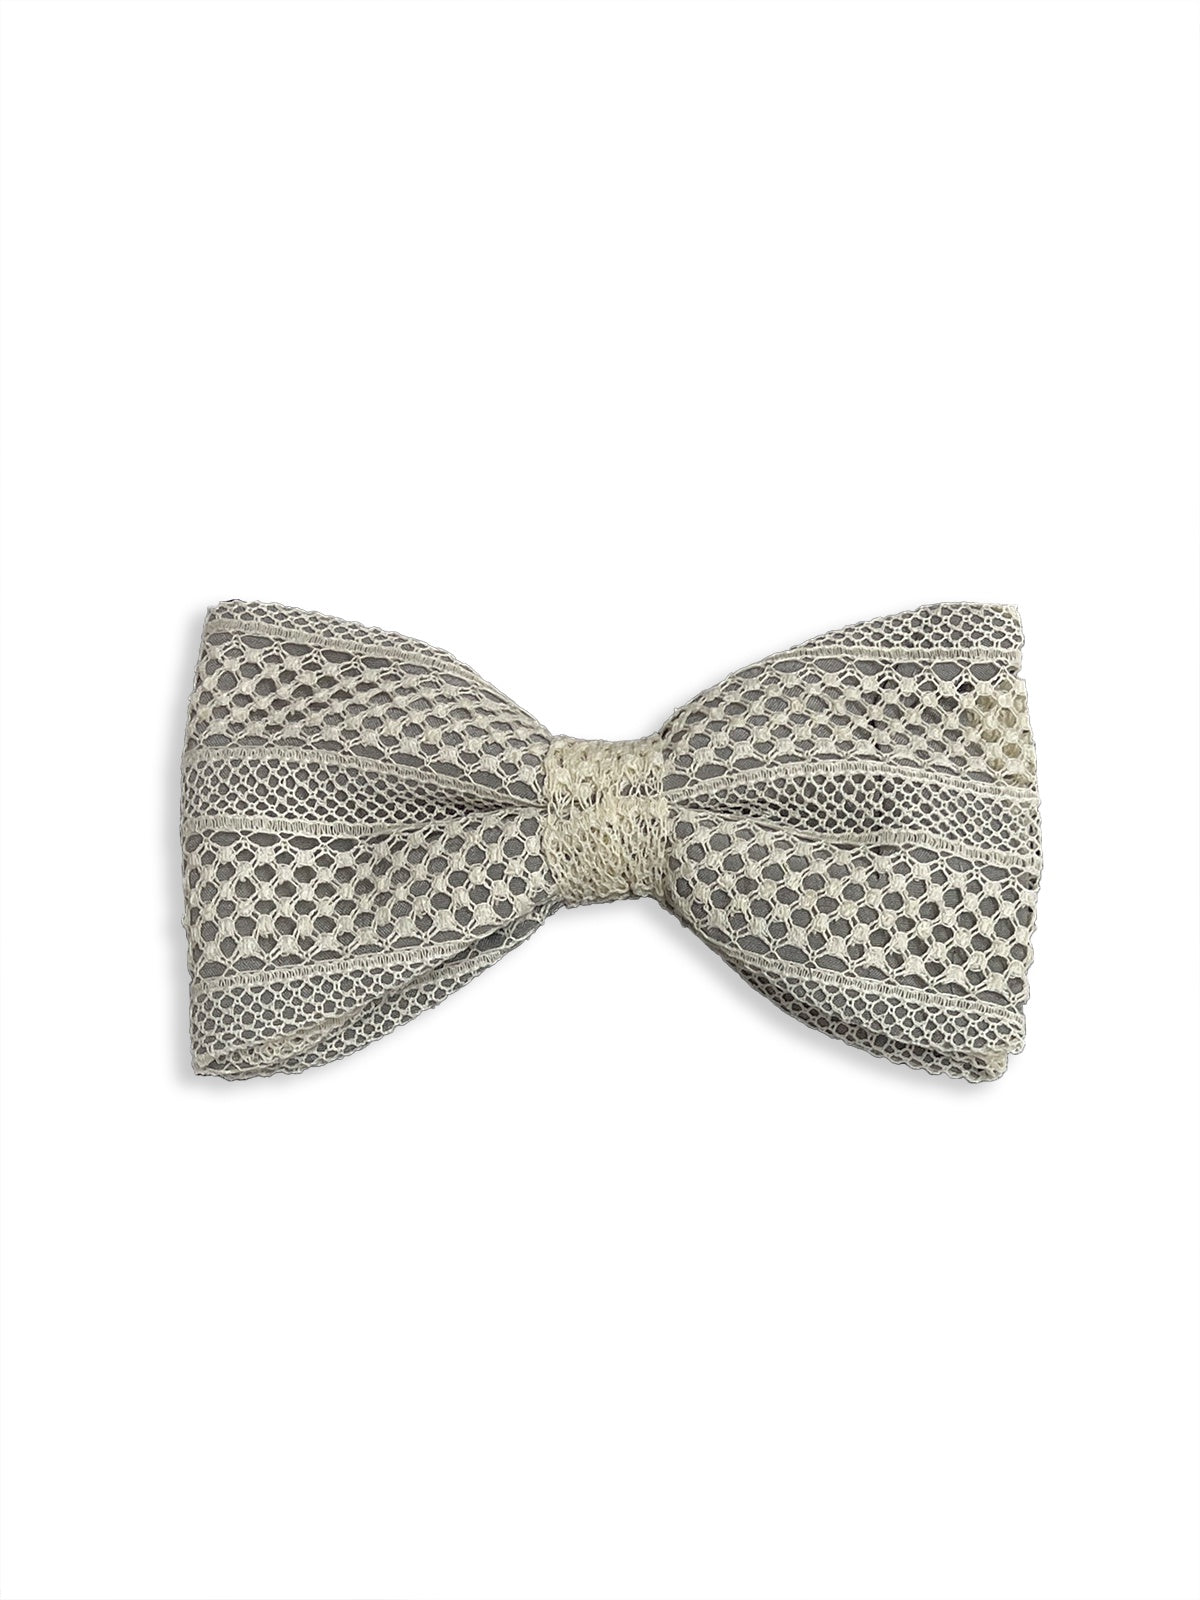 Ecru & Grey Lace Bow tie